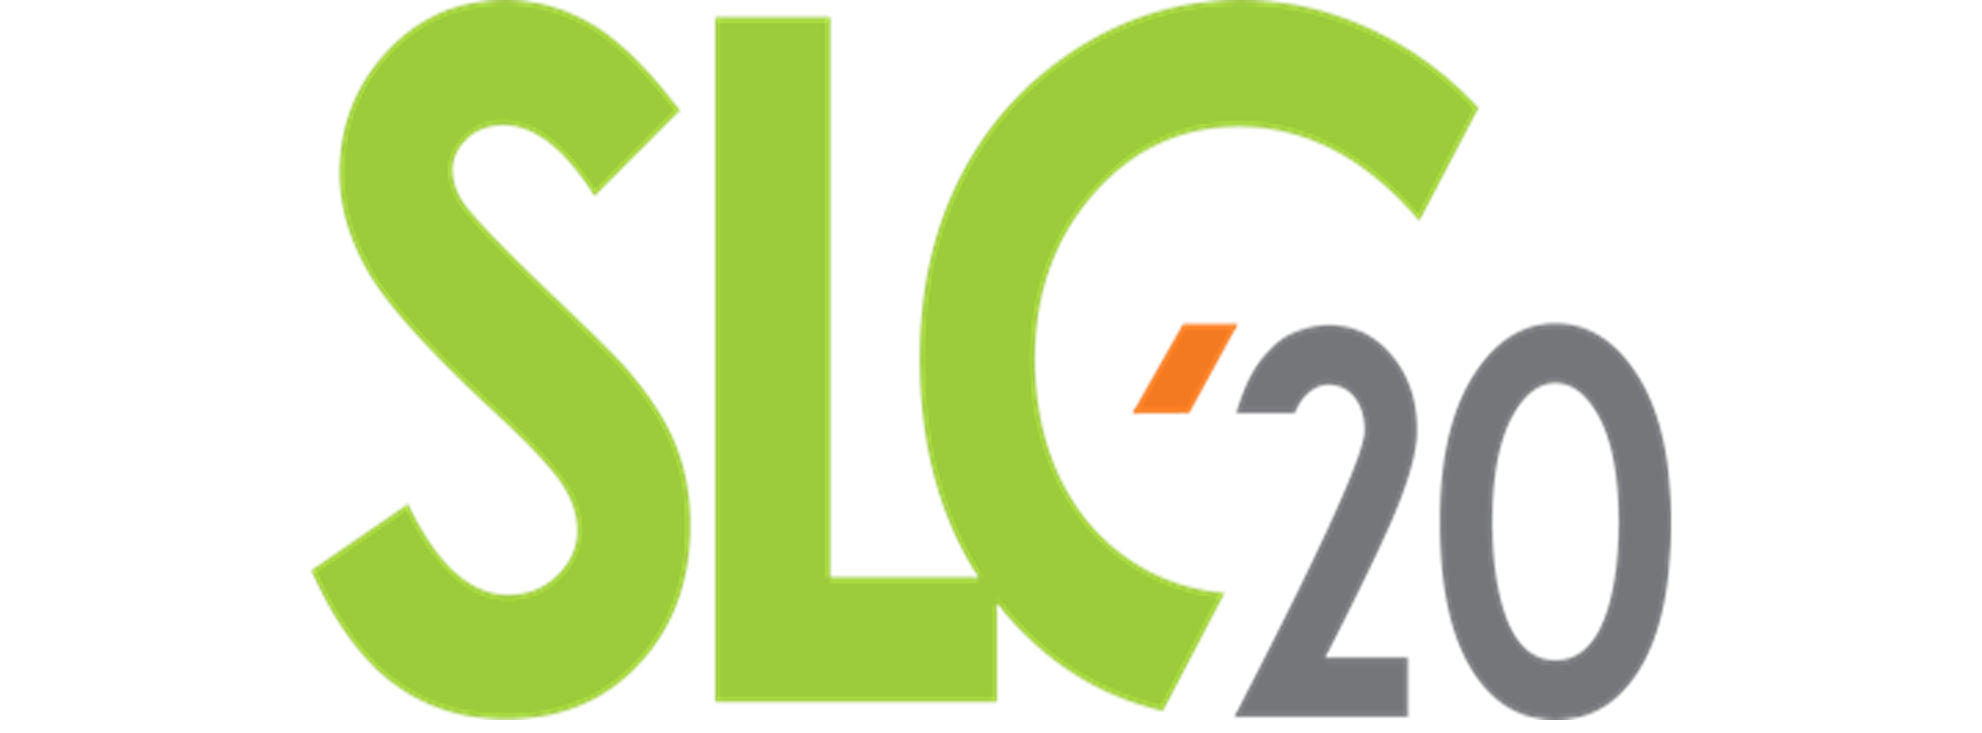 SLC2020 image